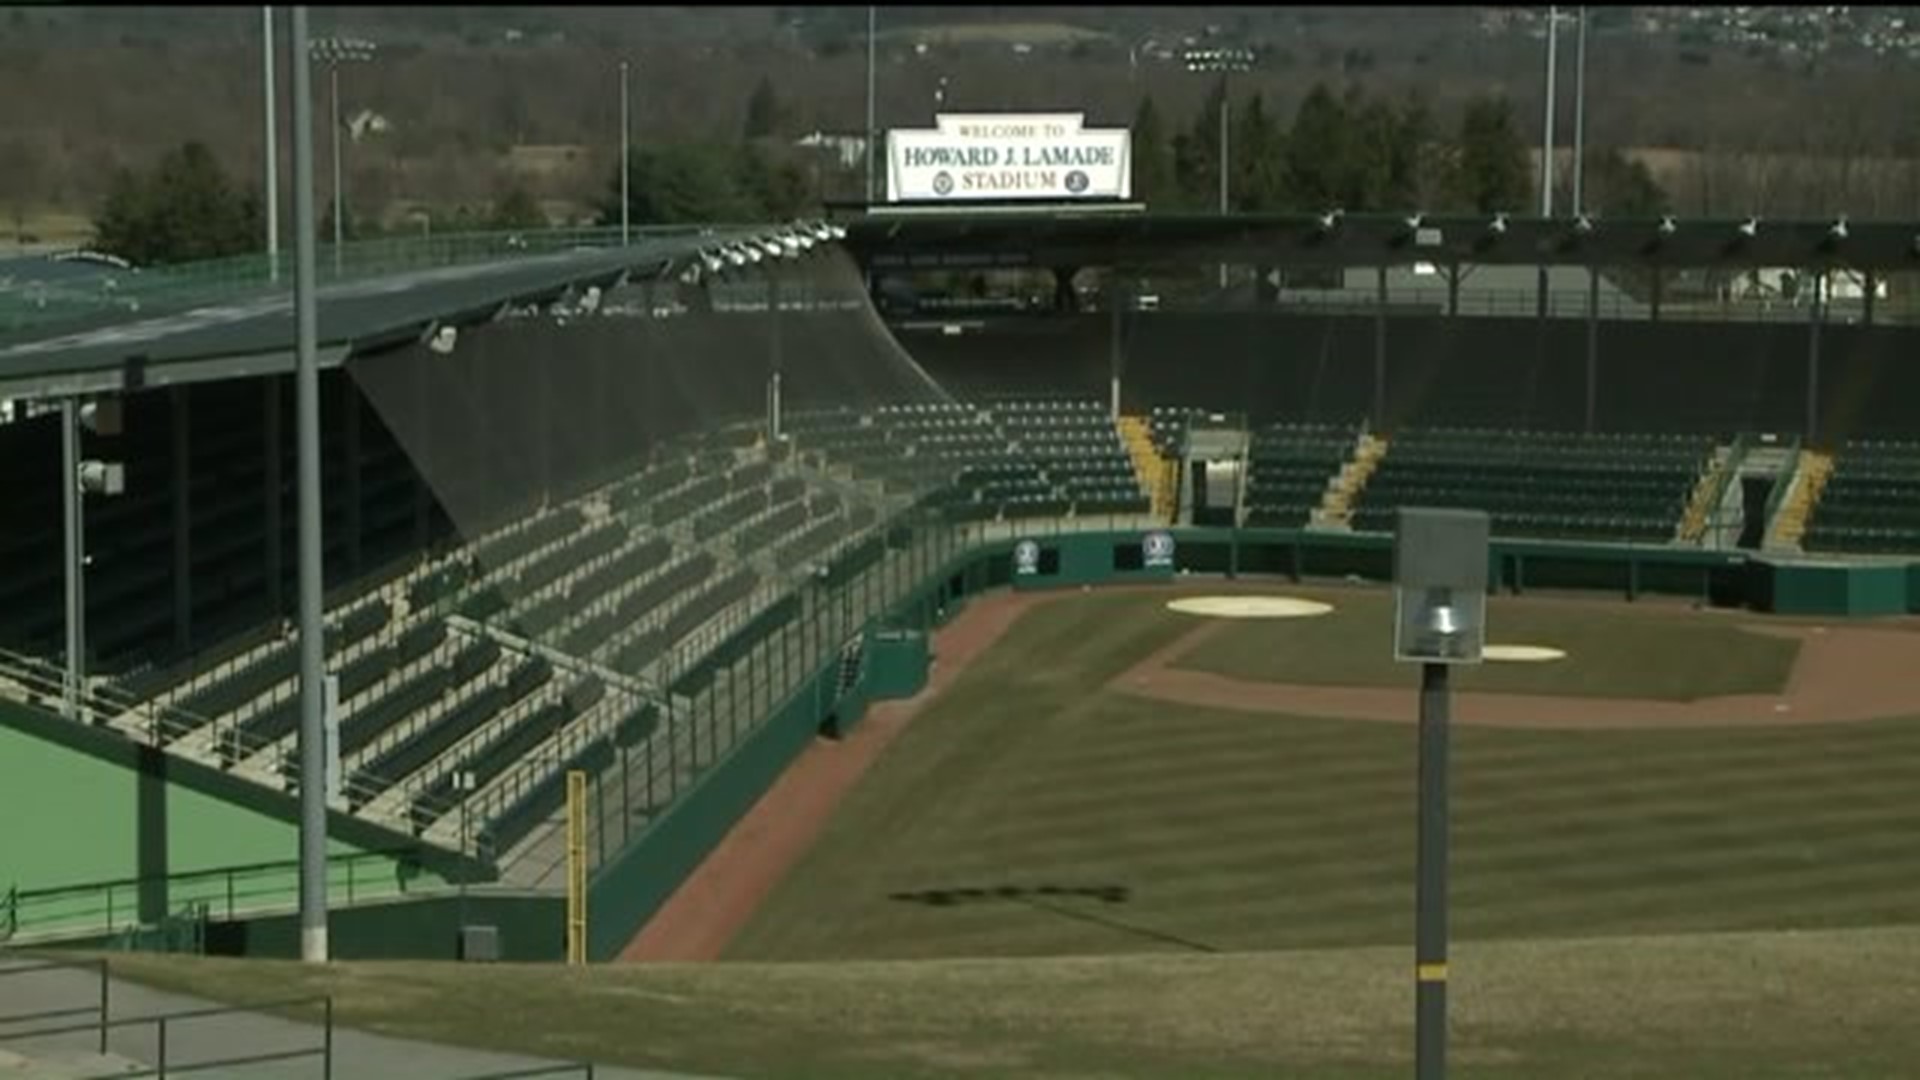 MLB Confirms BigLeague Baseball in Williamsport, No Public Tickets